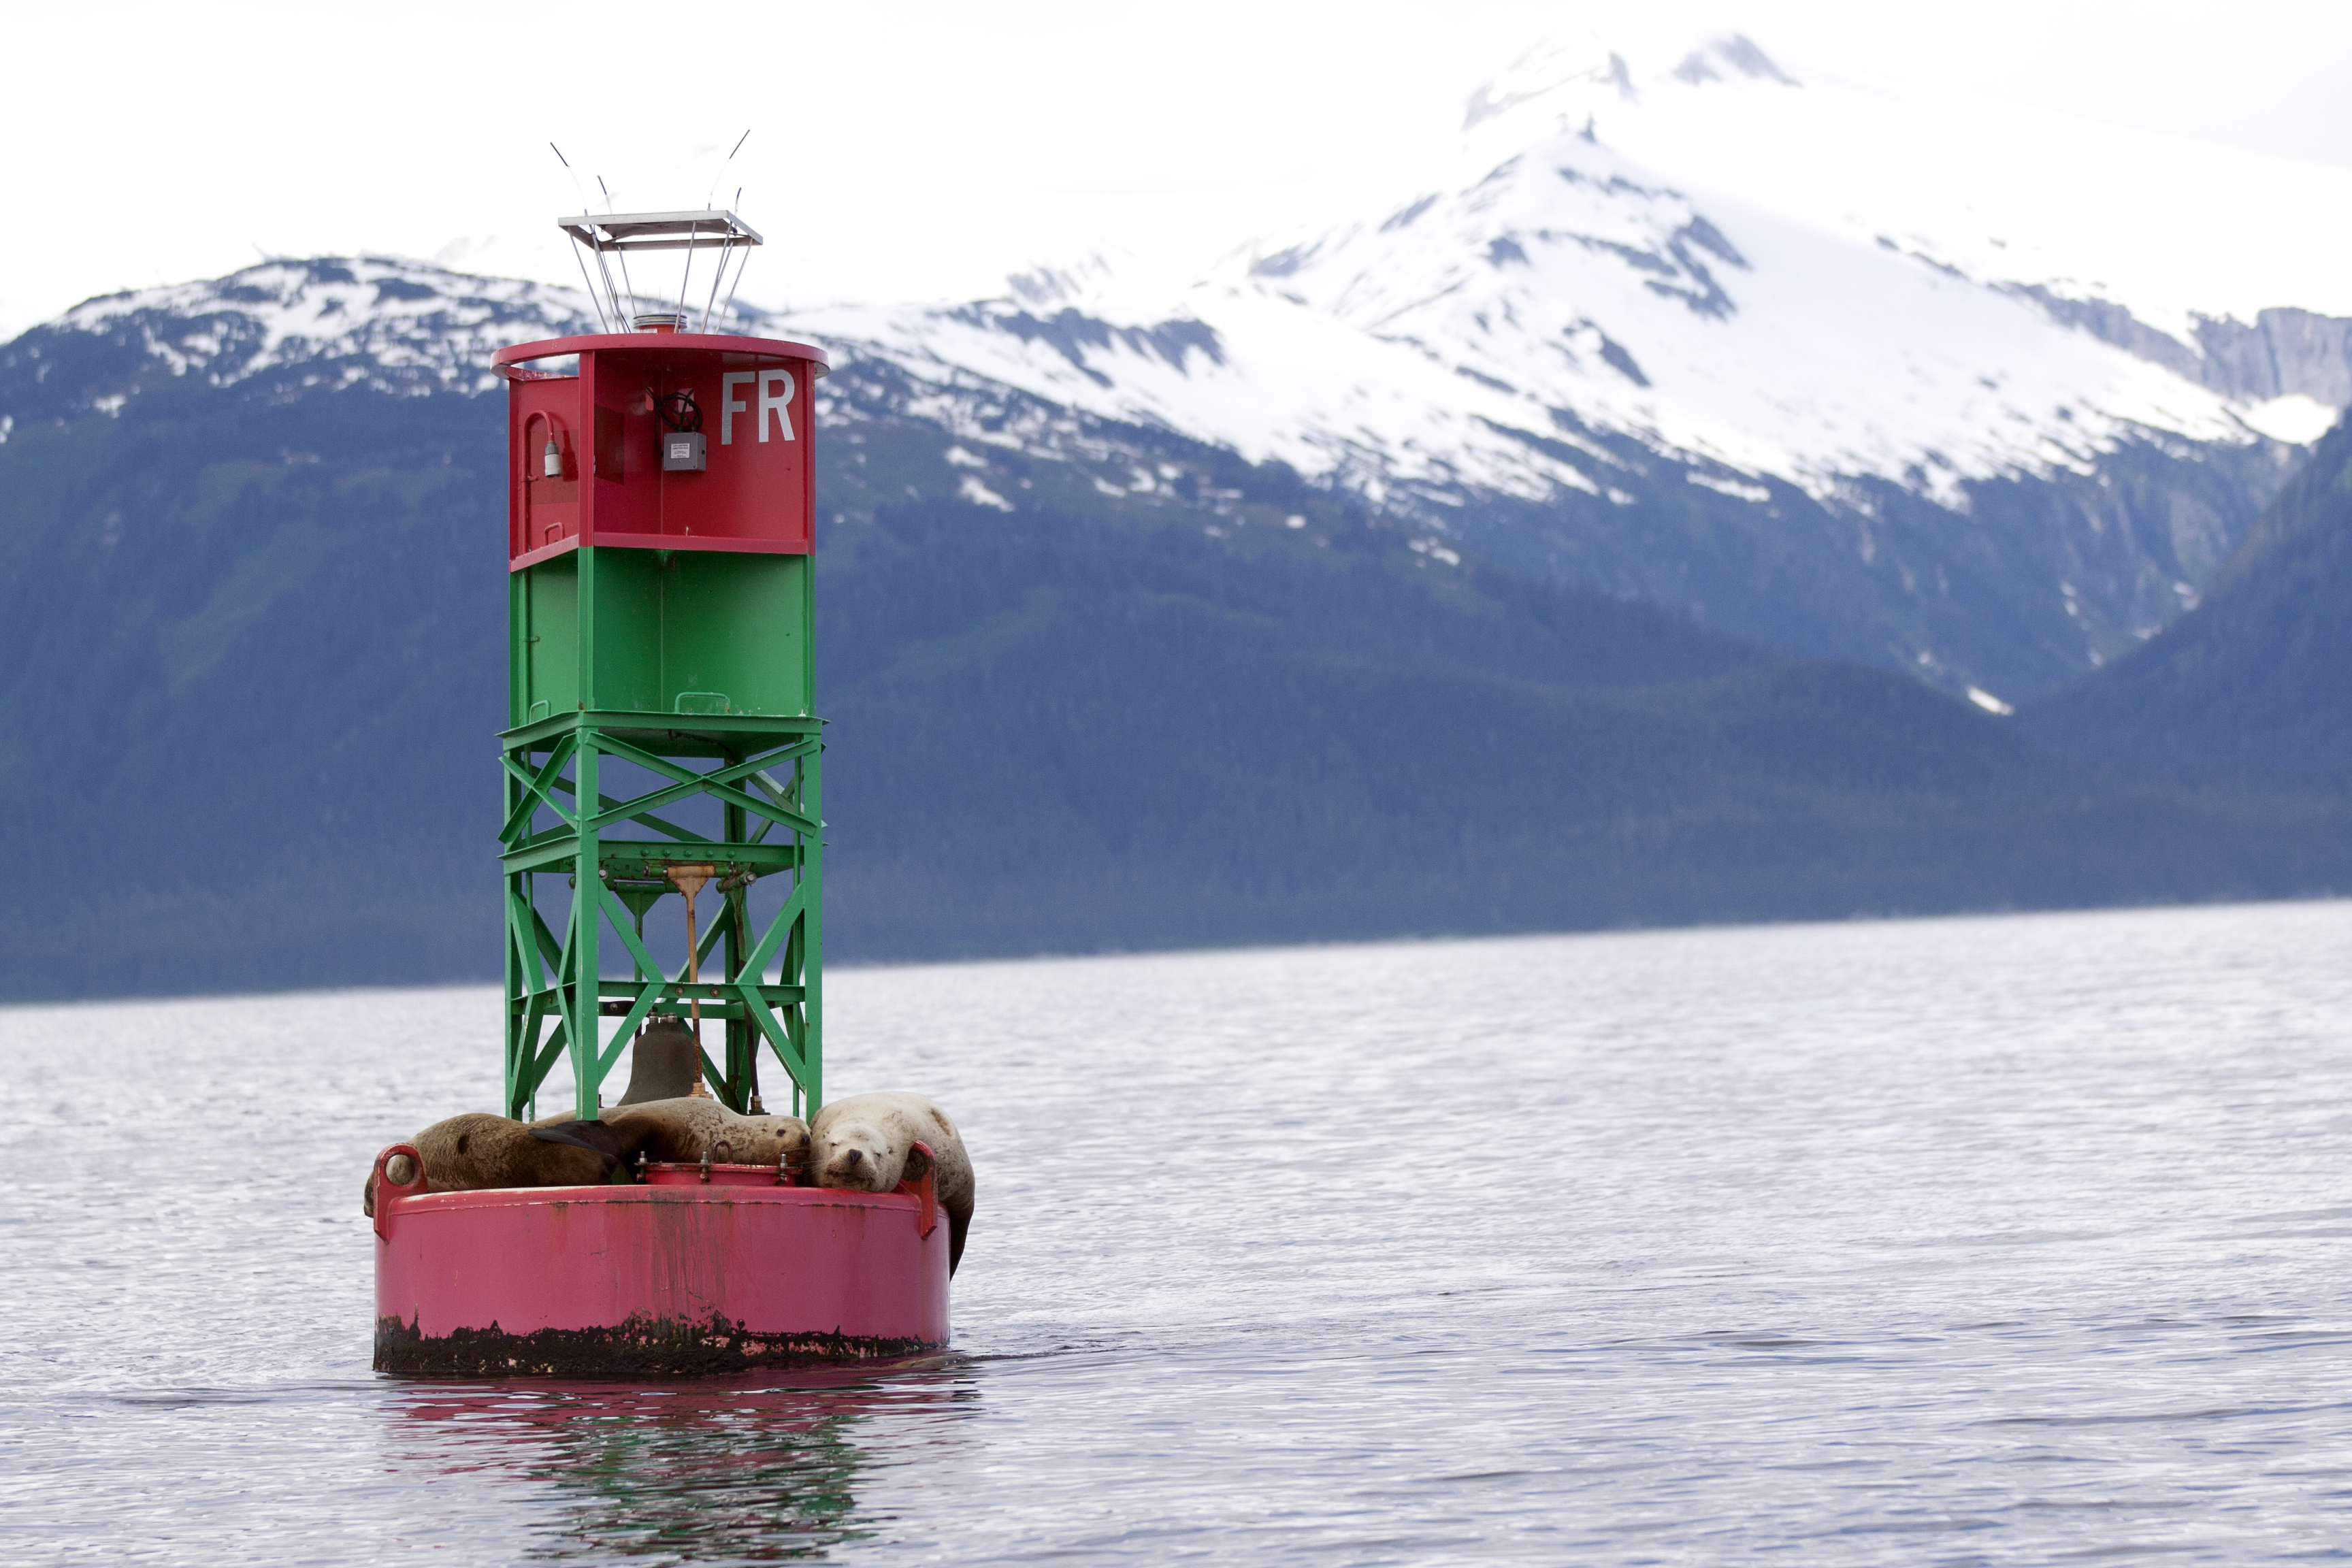 Sea lions on buoy photo